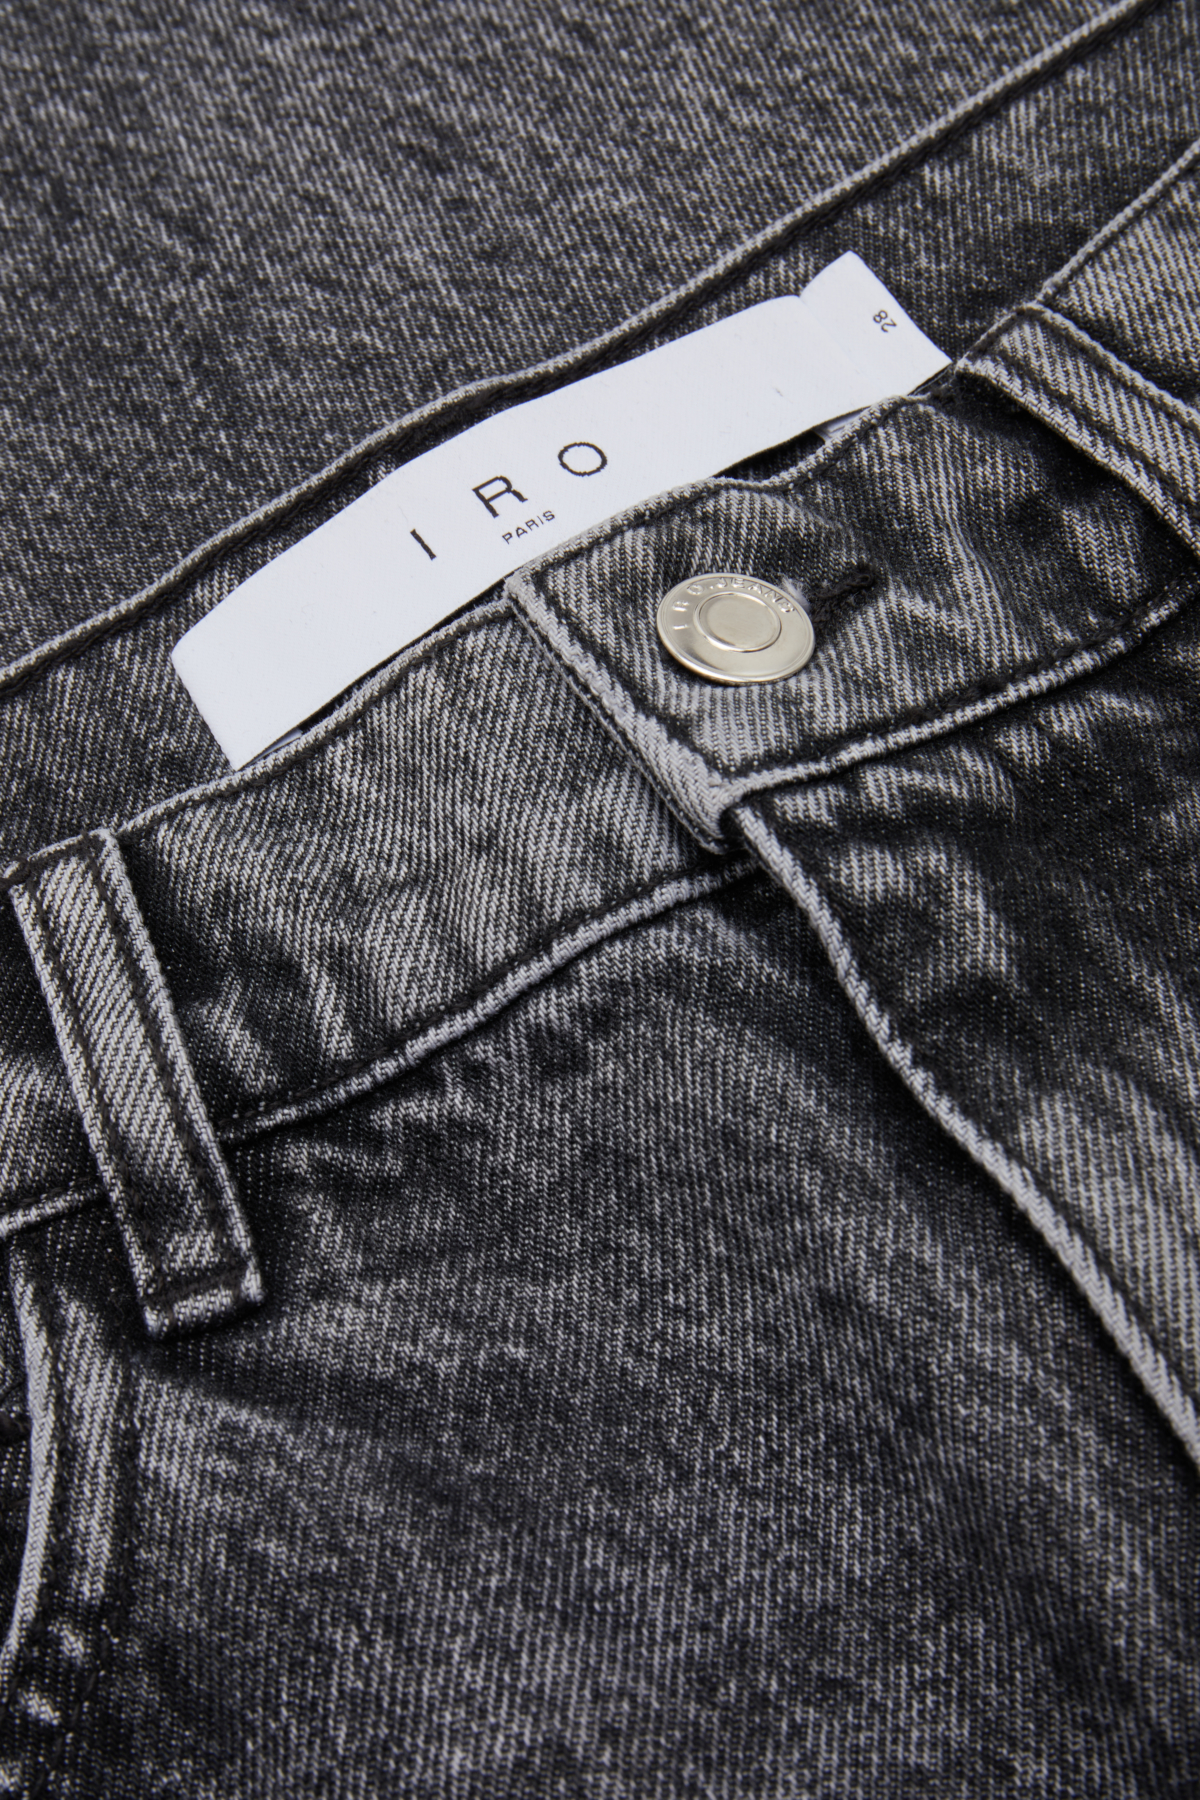 IRO High-Waisted Jeans in Grau 440790